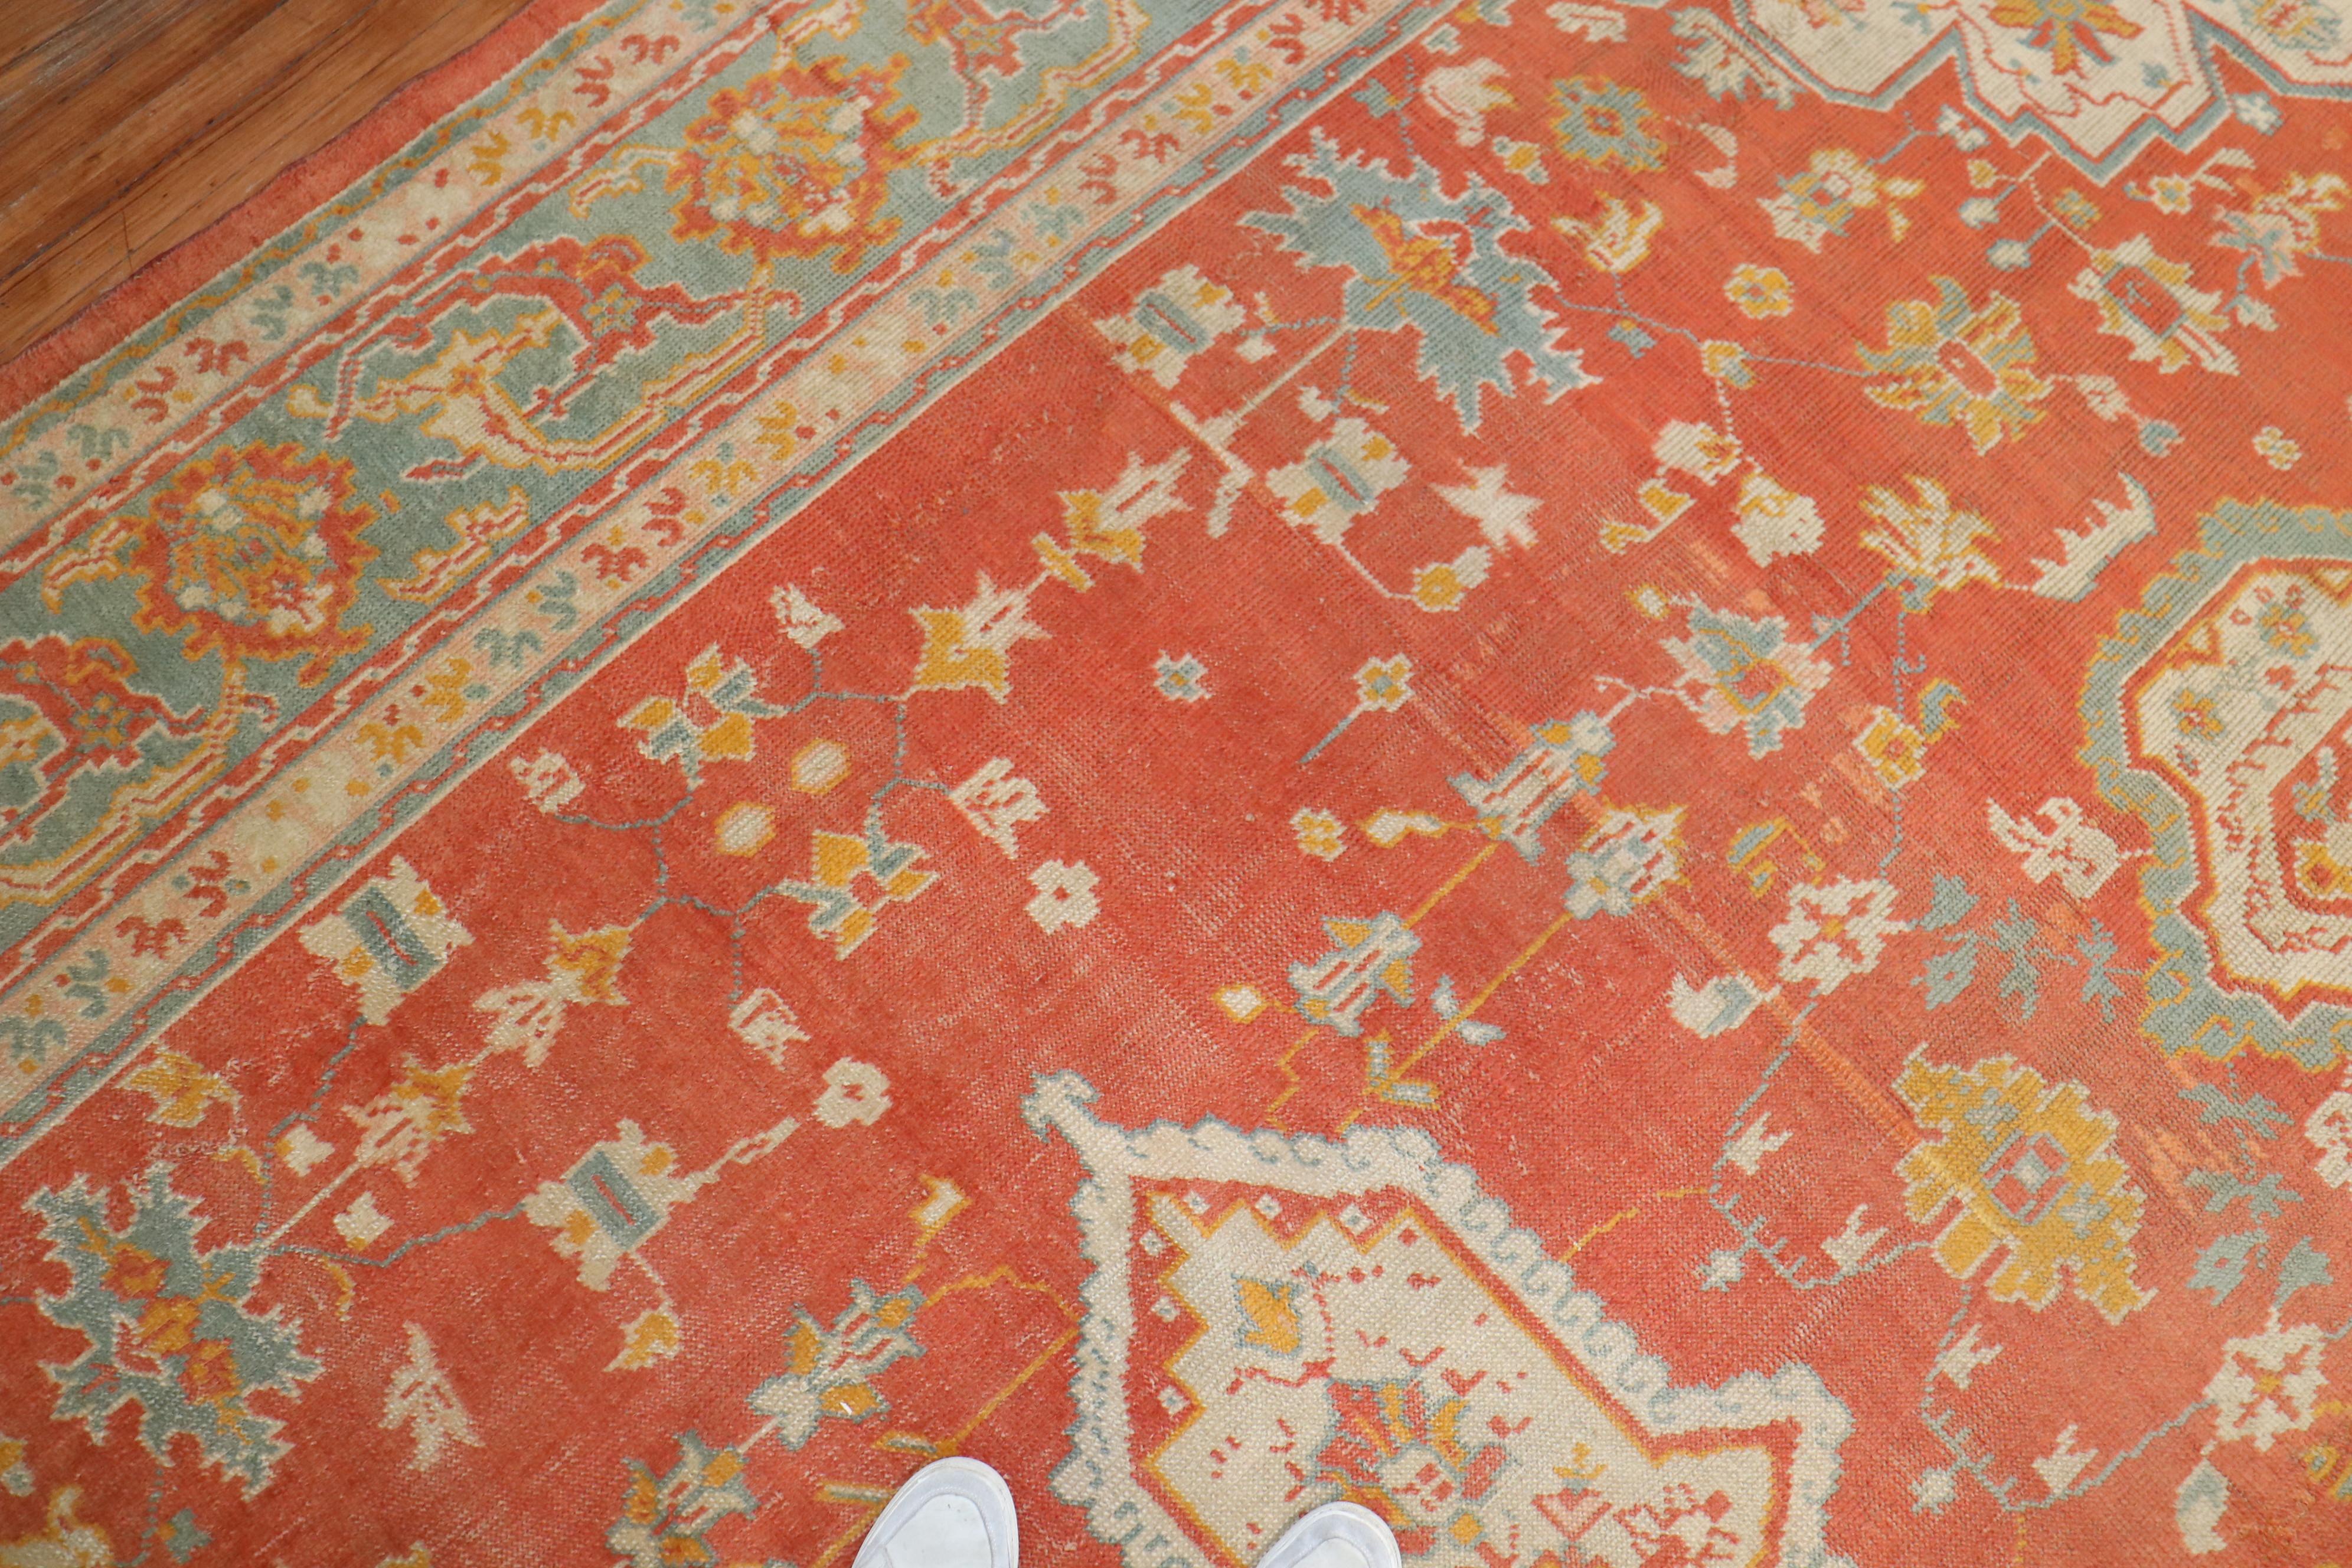 Hand-Woven Orange Peel Antique Turkish Oushak Carpet, 20th Century For Sale